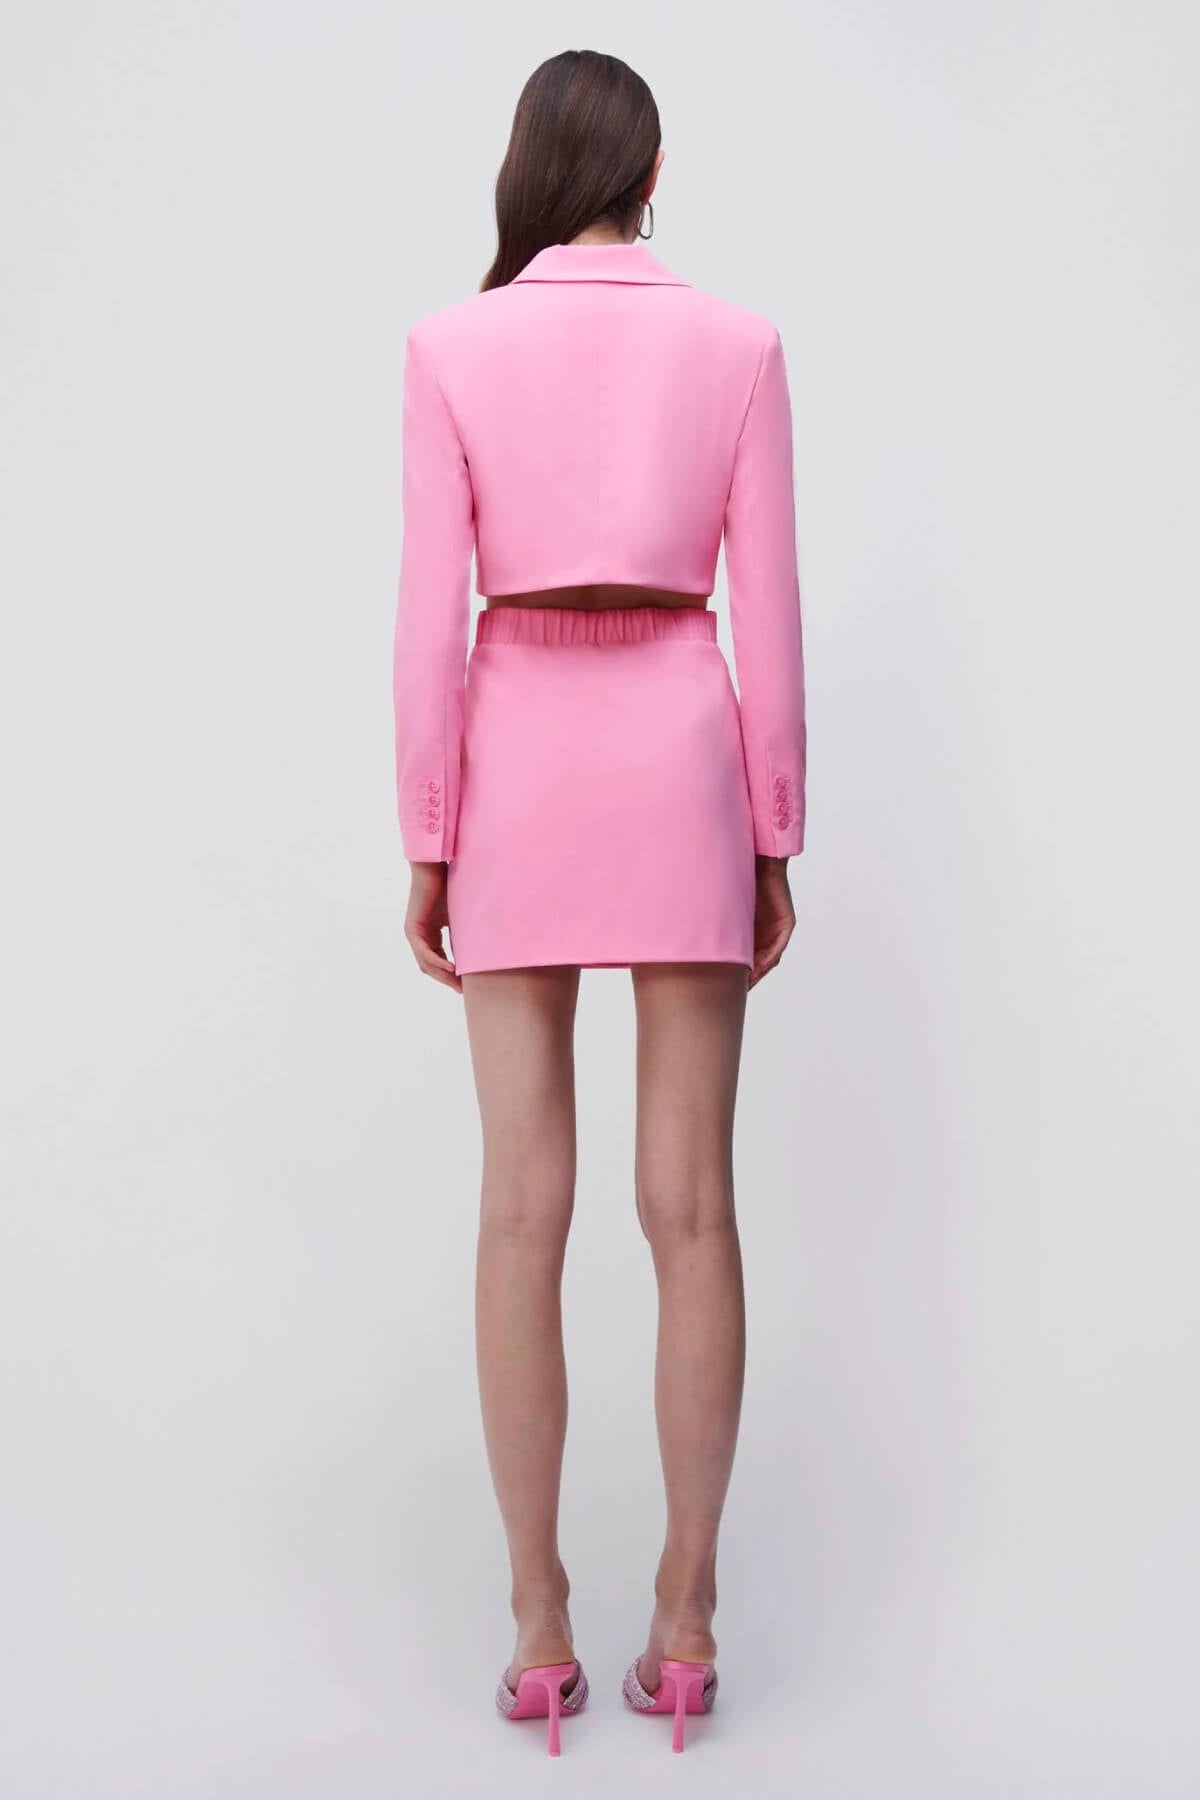 Simkhai Kylo Cut-Out Blazer Mini Dress - Taffy Pink